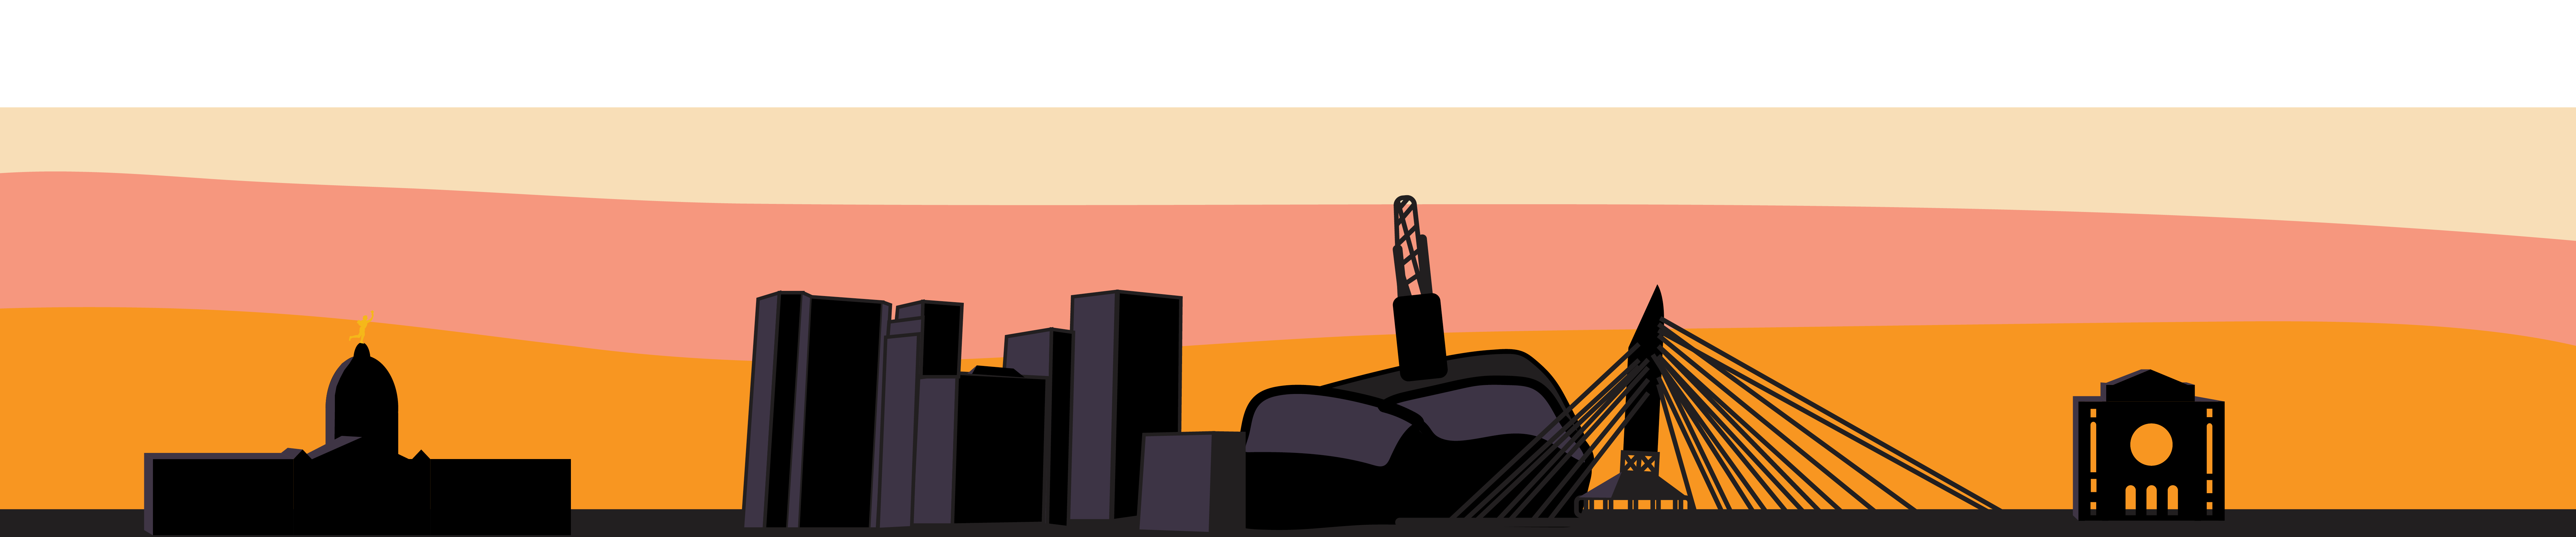 PSCC Sunset with Skyline Alternate Layout